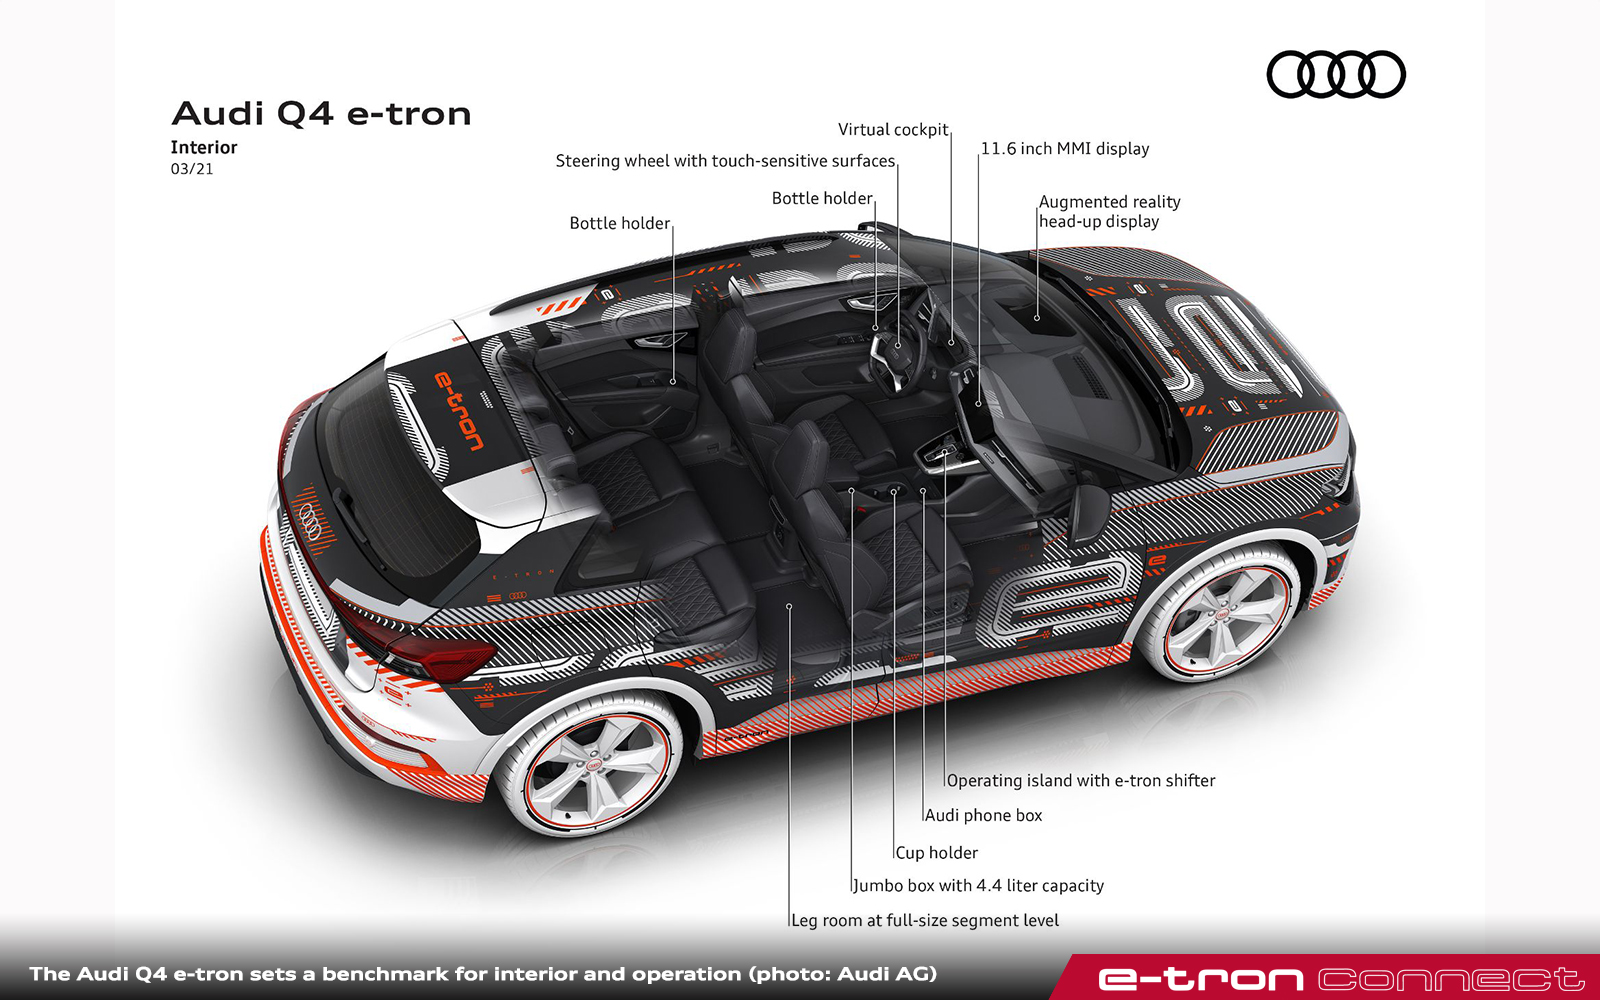 A new dimension of e-mobility: the Audi Q4 e-tron sets a benchmark